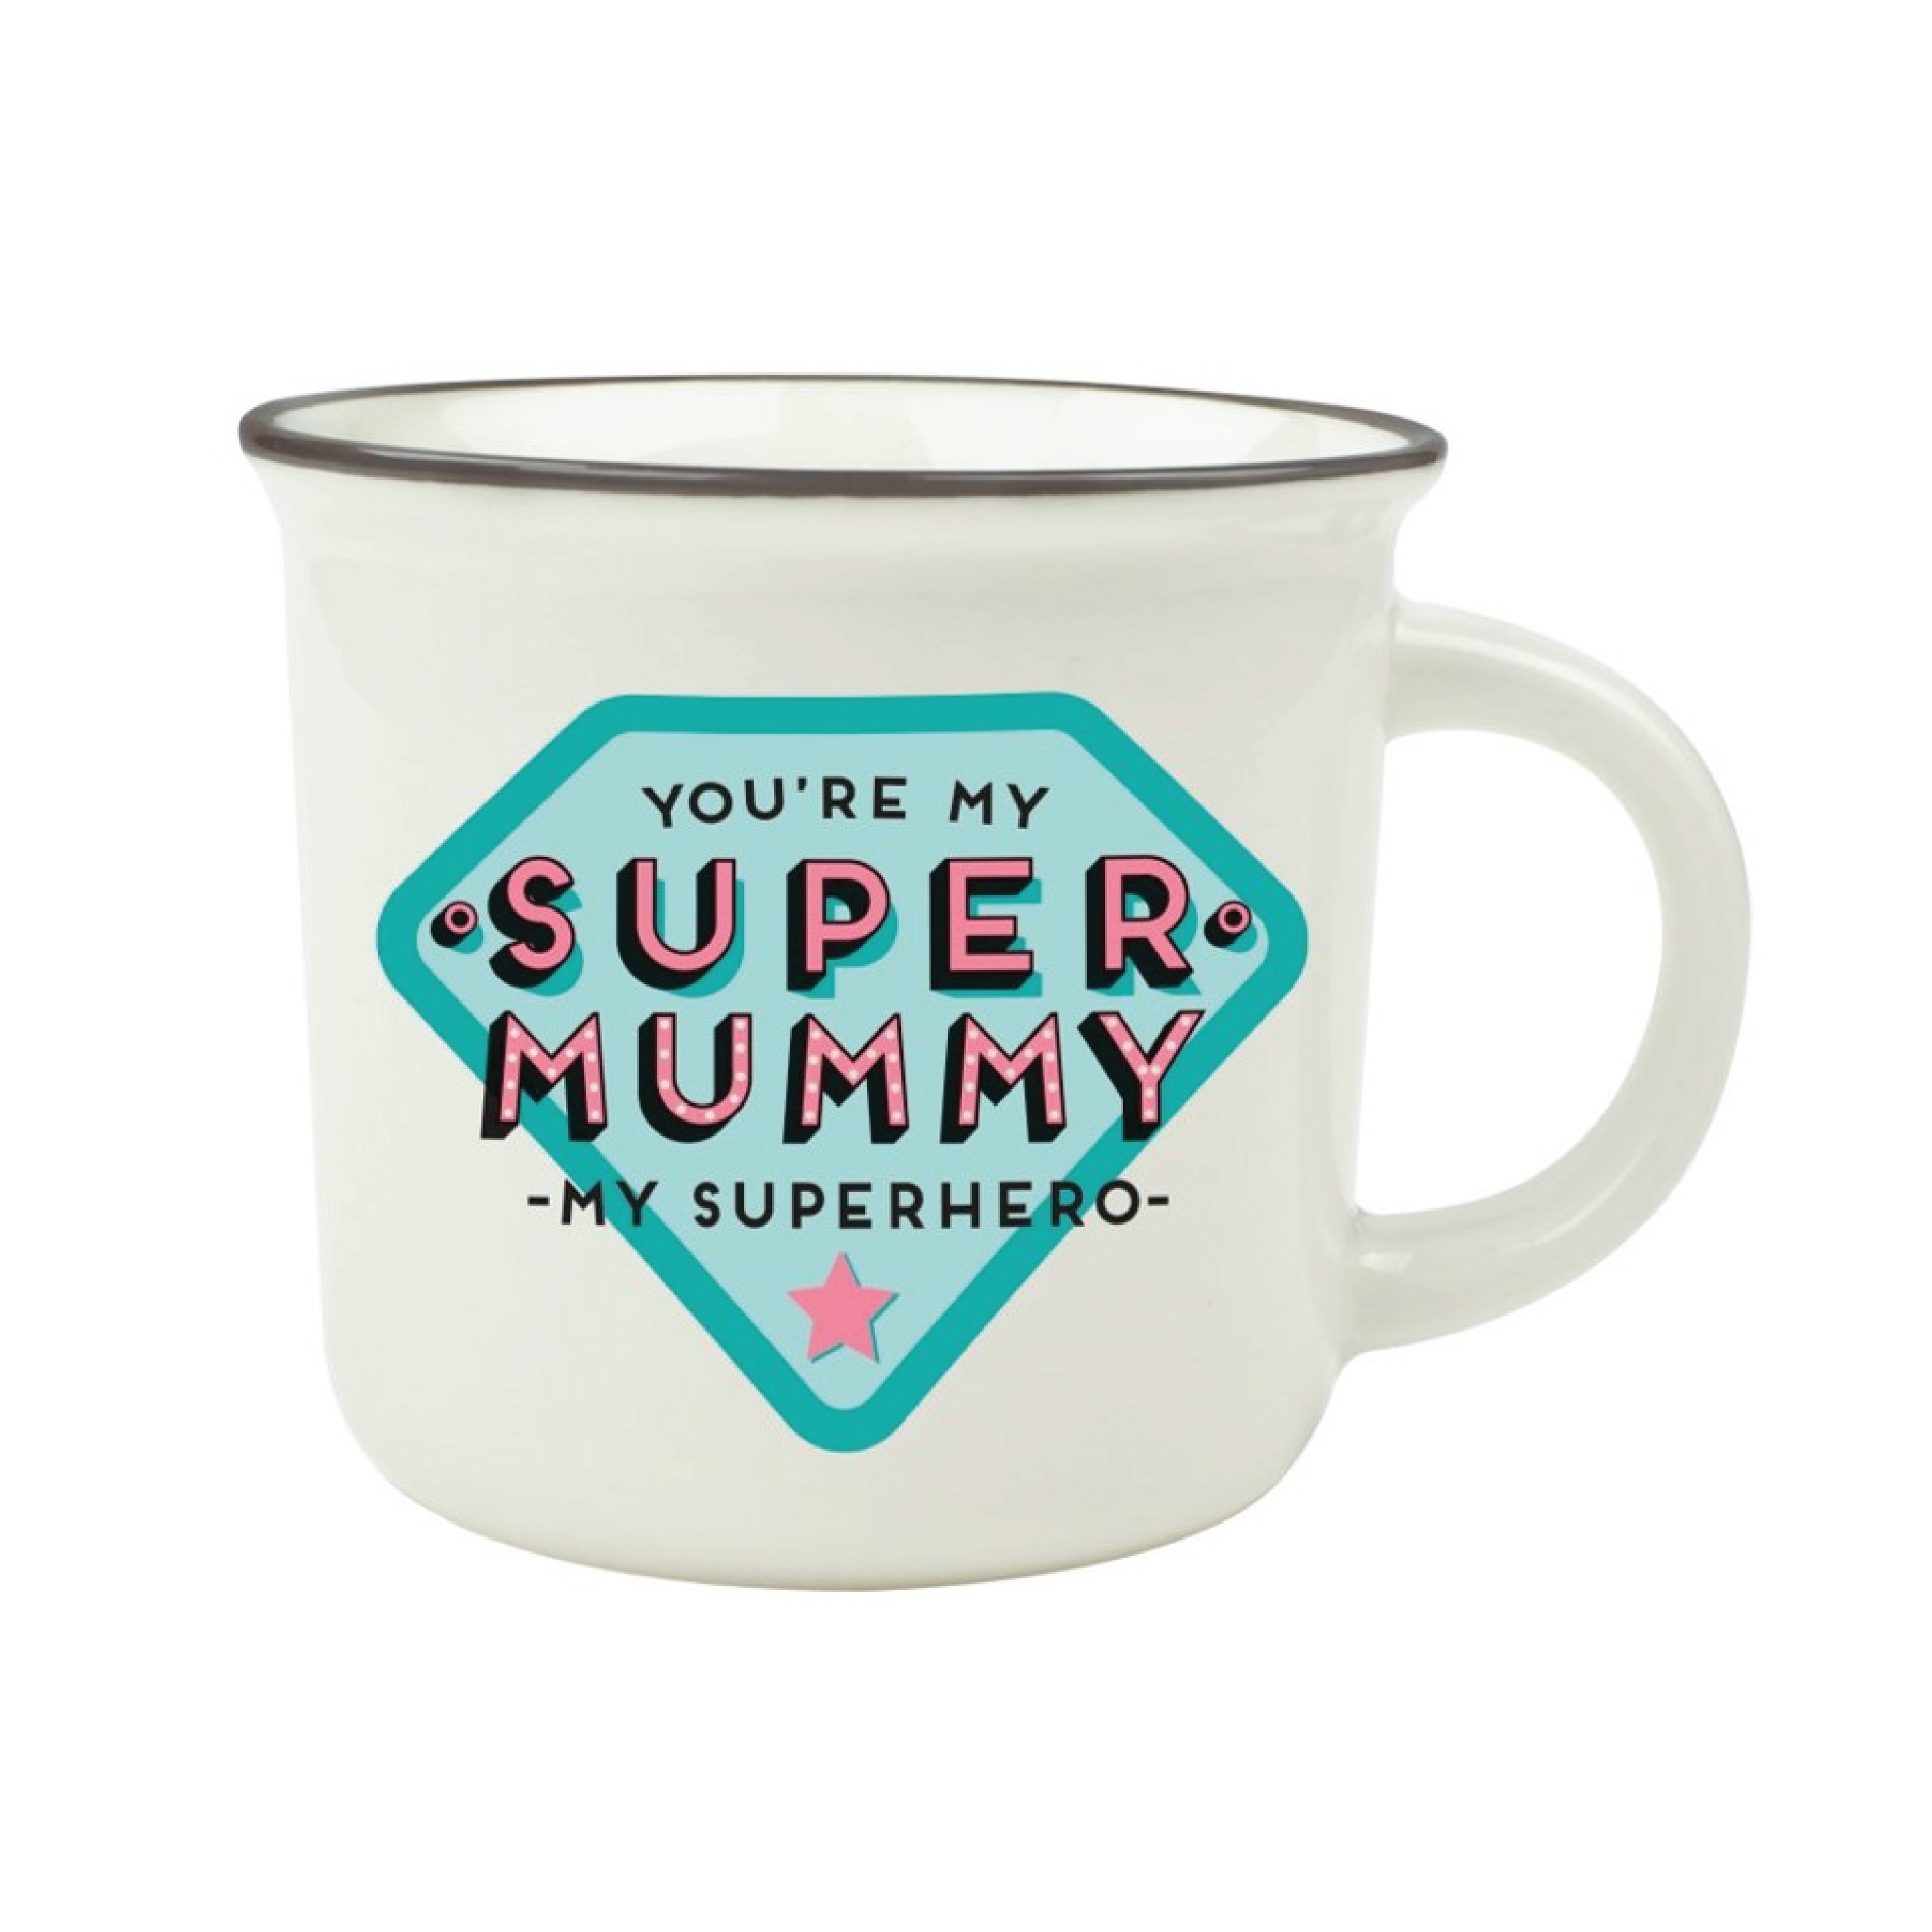 Super Mummy Cup-puccino krus, 350 ml